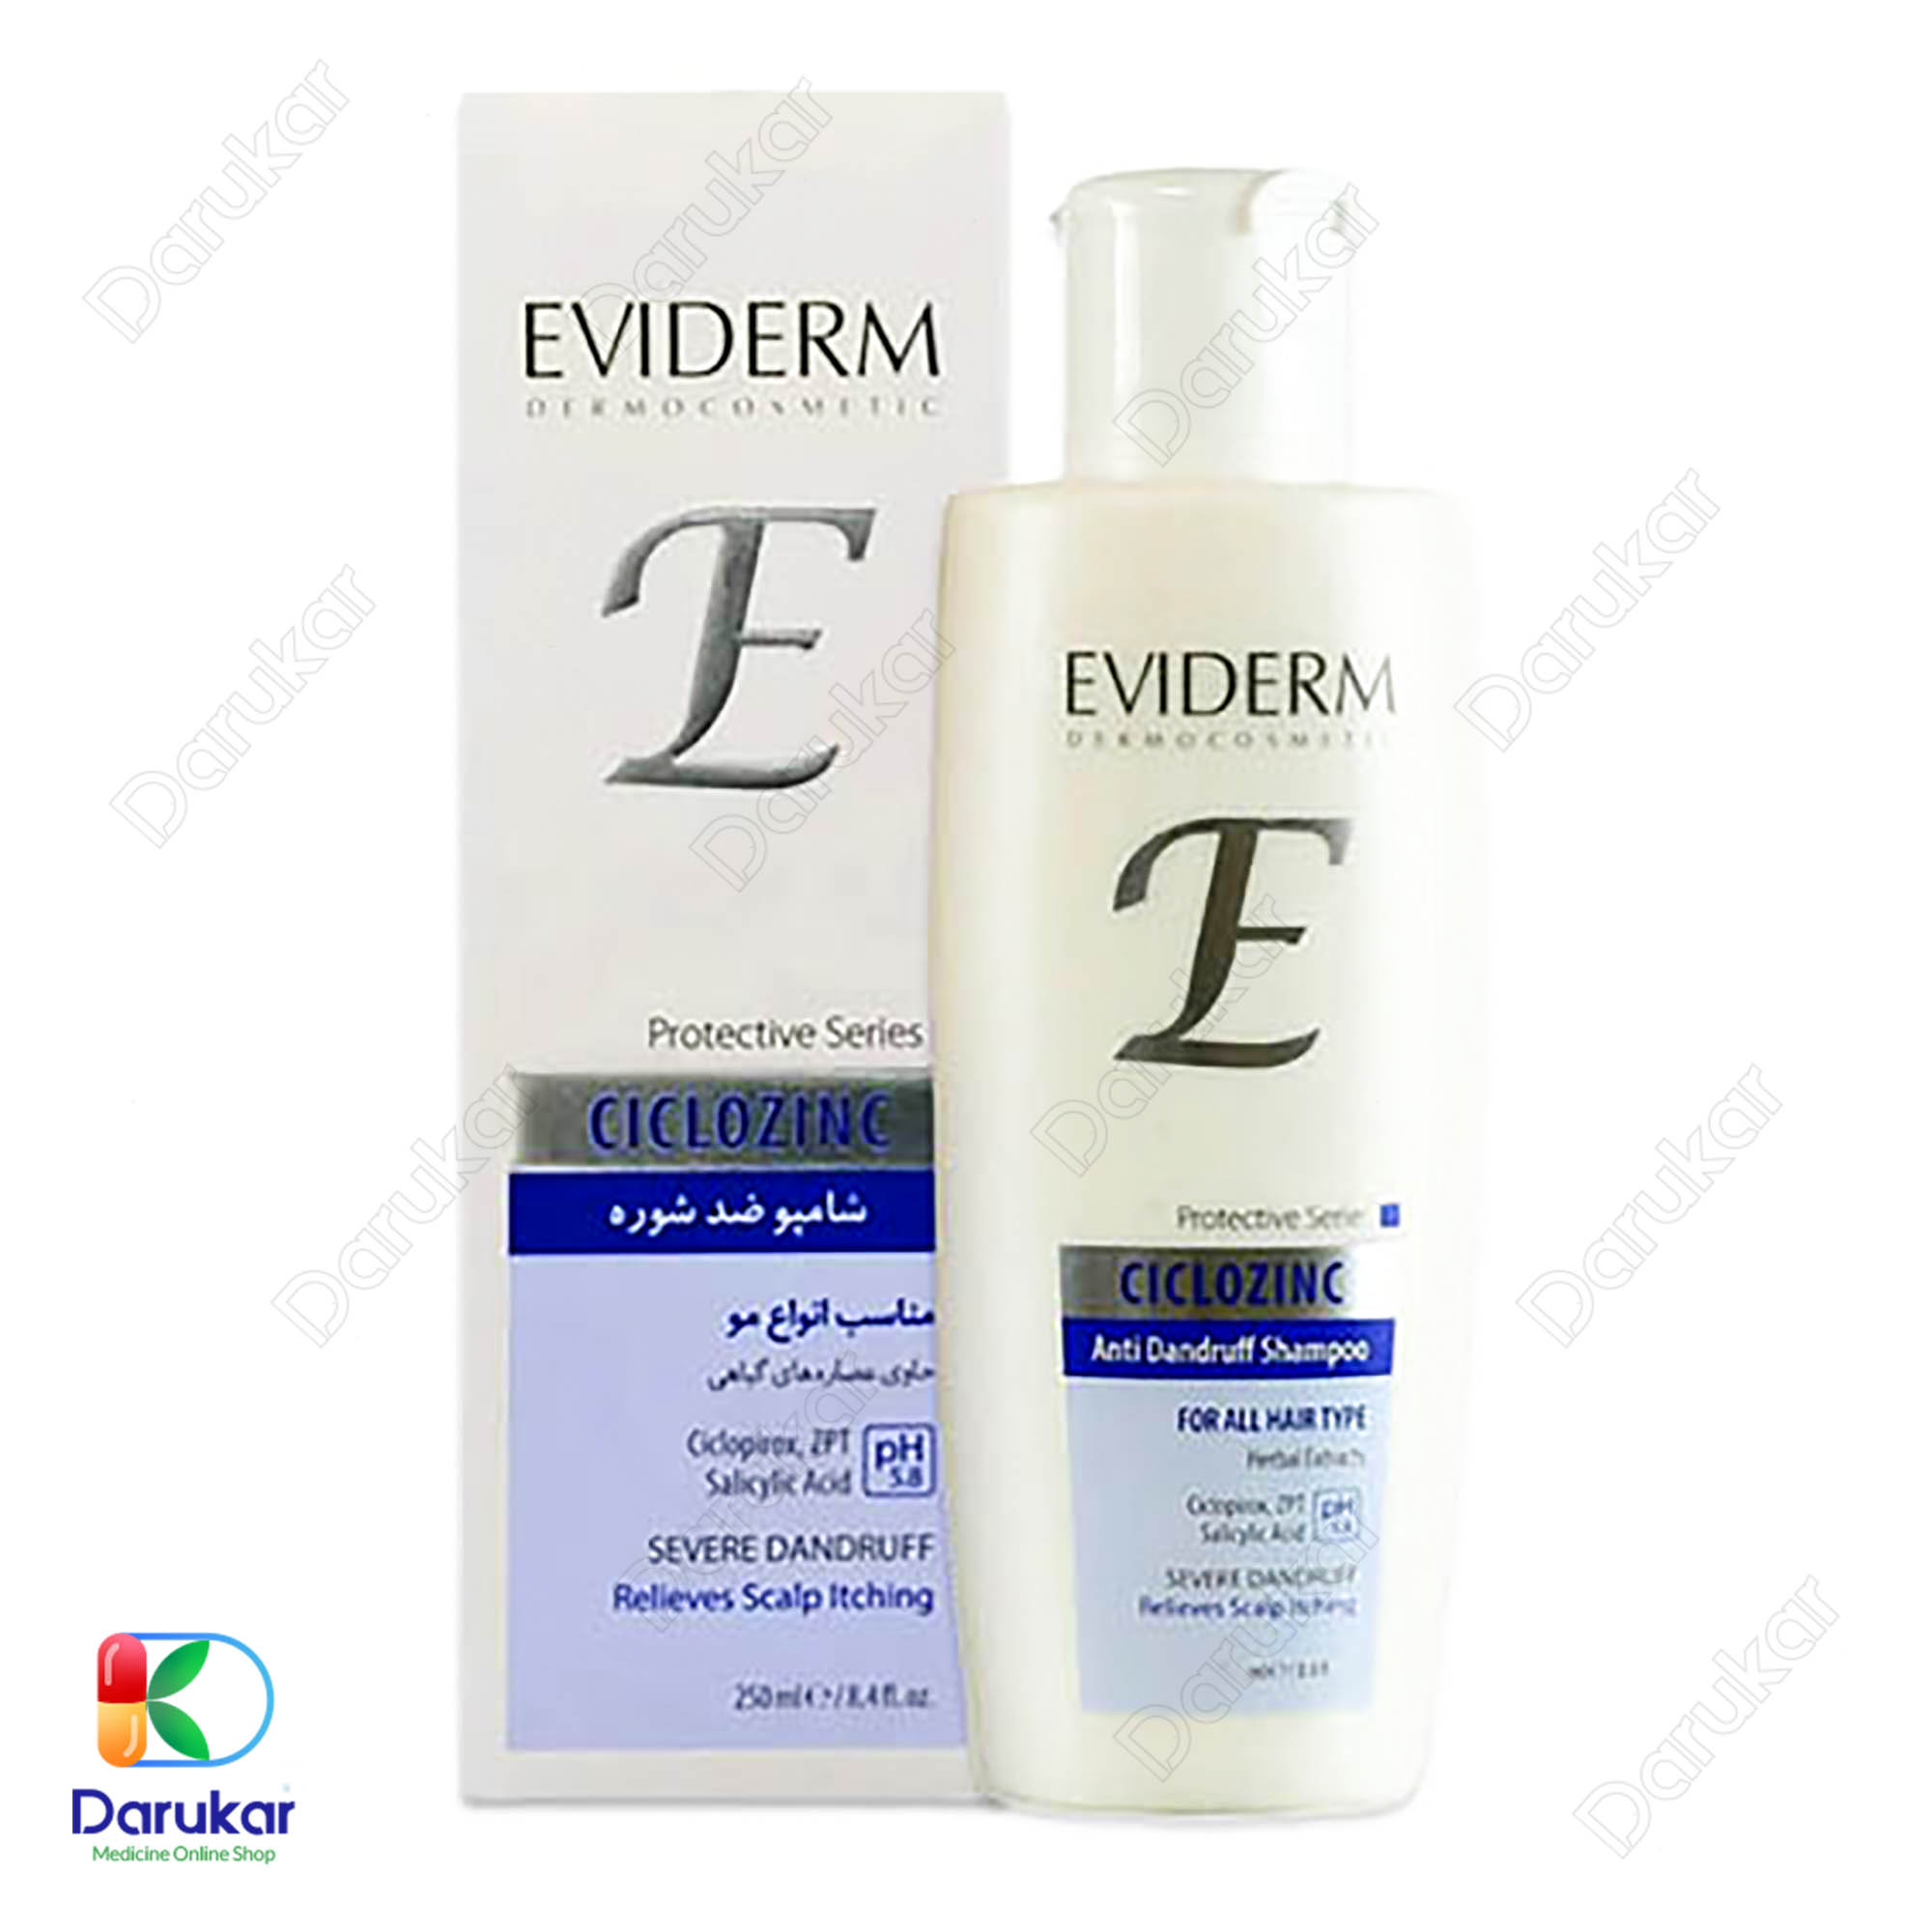 eviderm ciclozinc anti dandruff shampoo for all types of dandruff 2